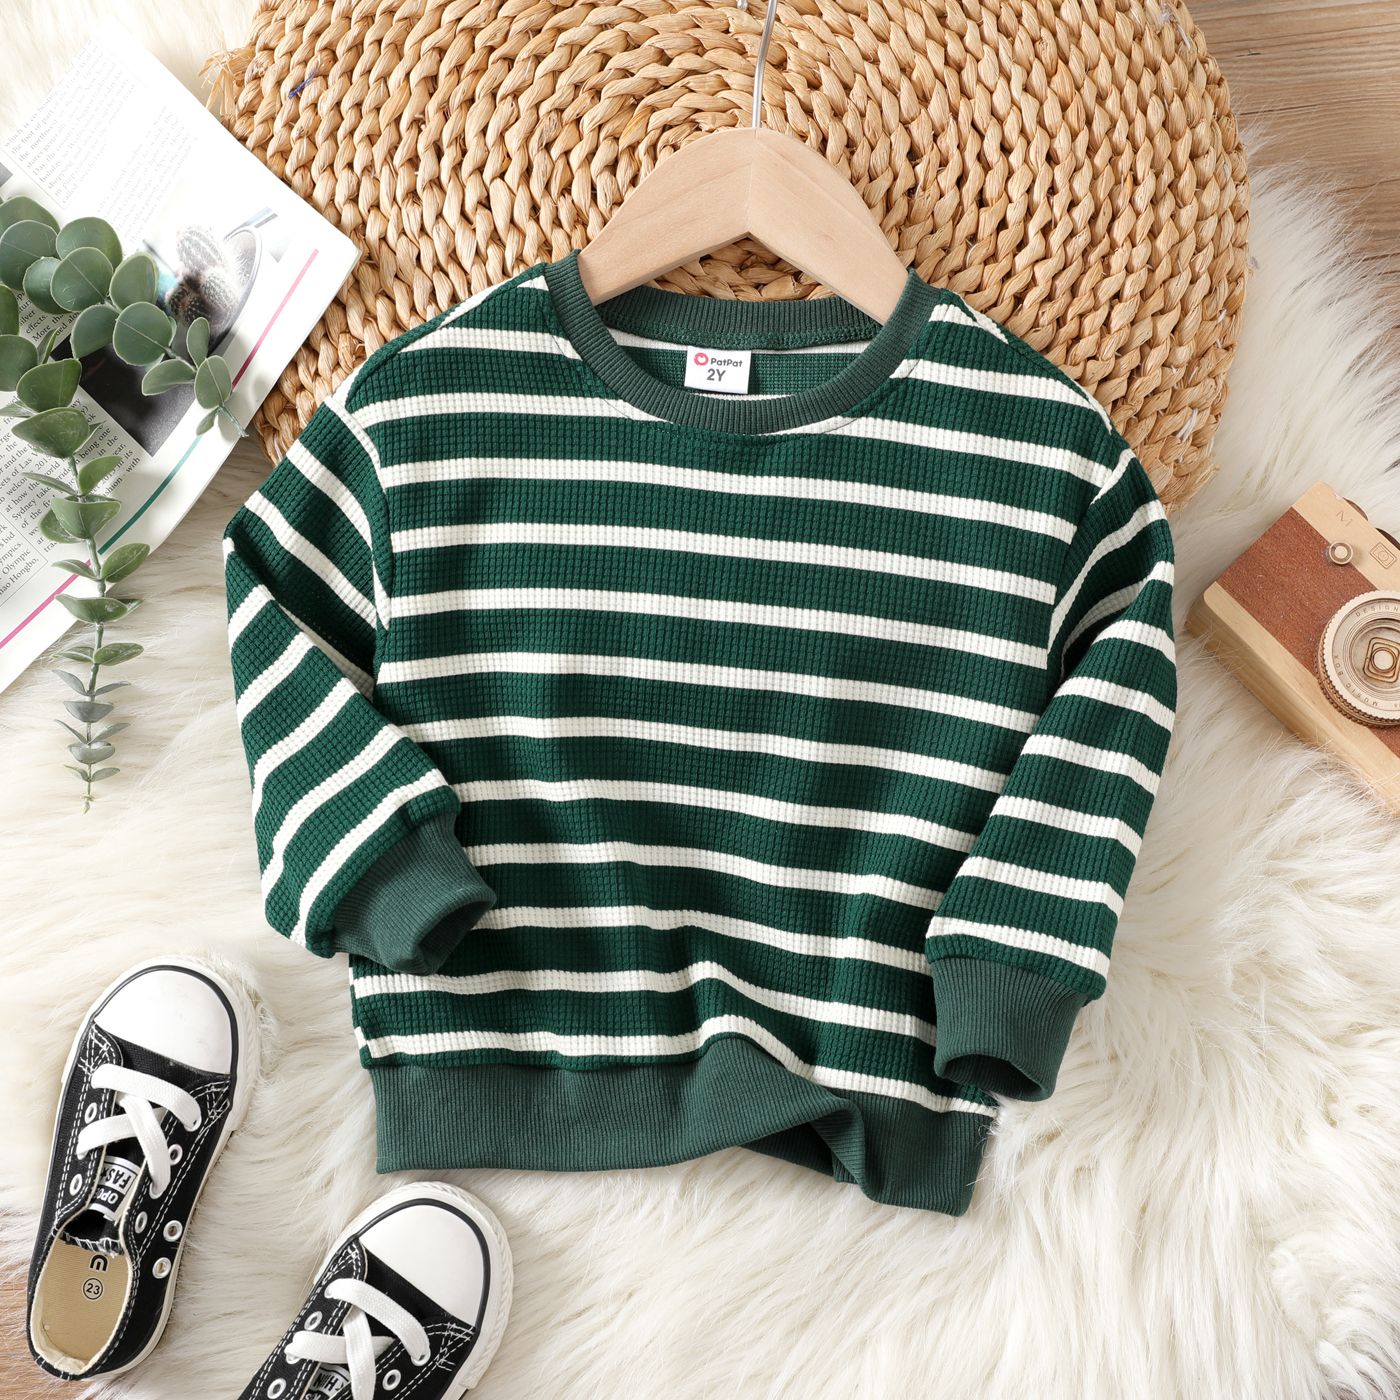 Toddler Girl/Boy Casual Stripe Sweatshirt